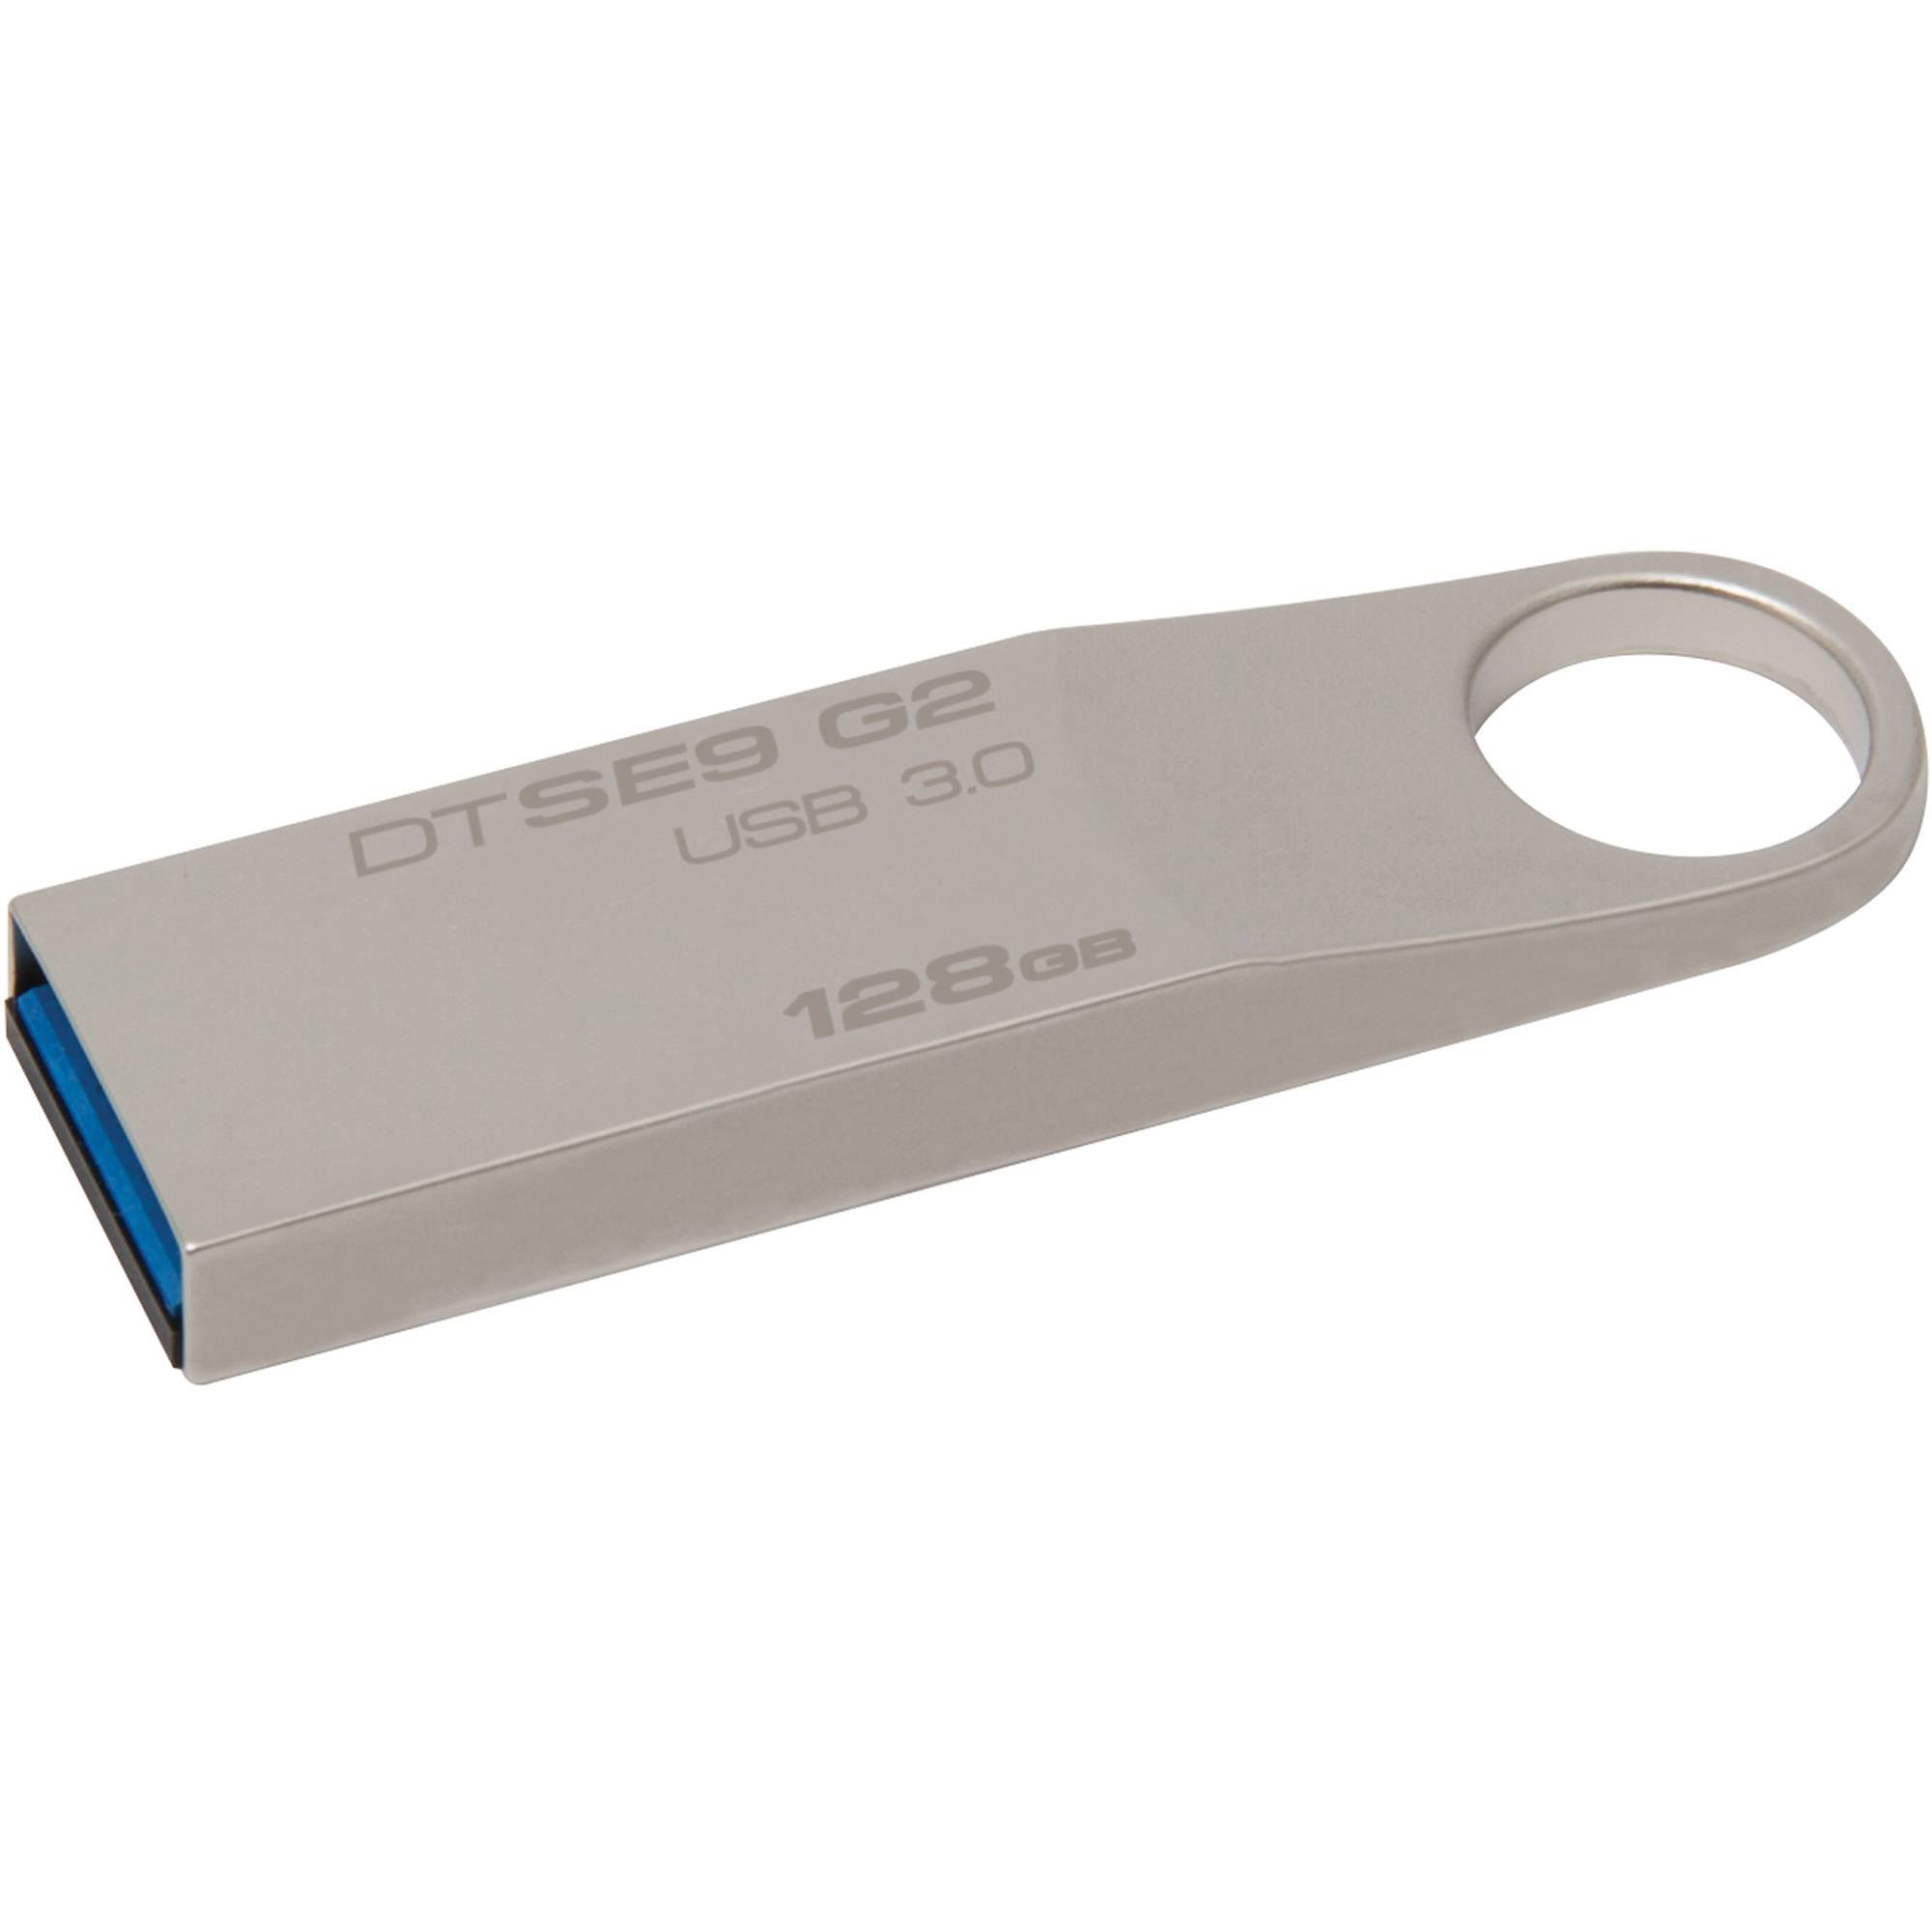 Verbatim Clé USB 2.0 Stick Pin Stripe 128GB - CARIBBEAN BLUE (1) (49461)